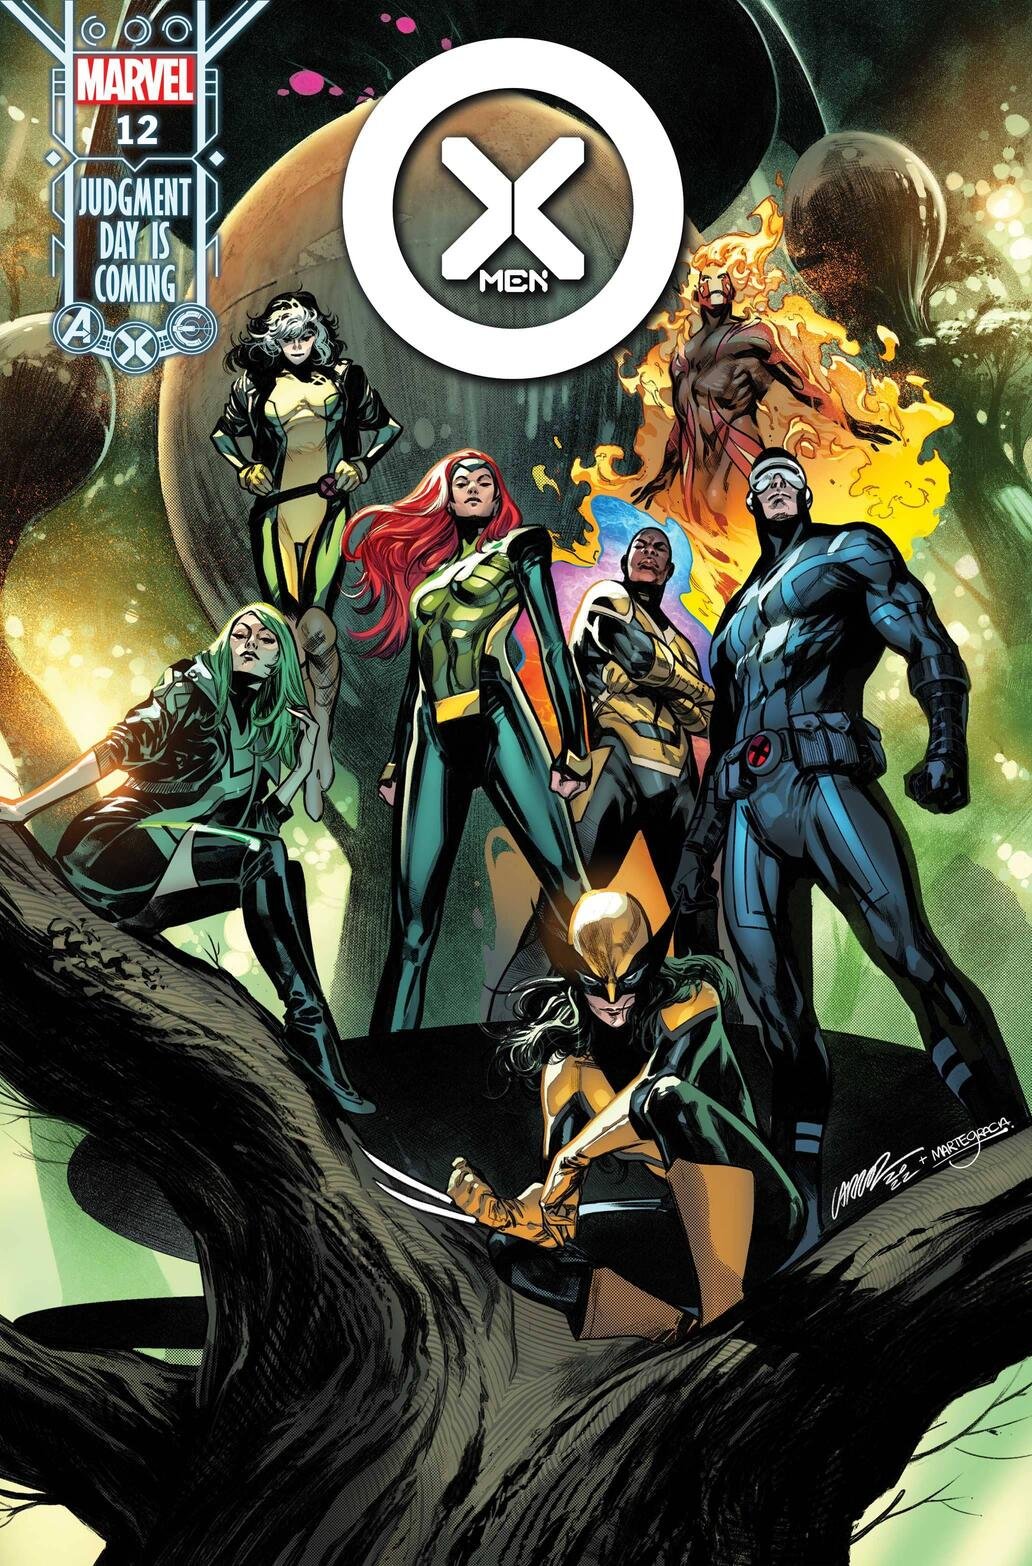 Cover di X-Men 12 di Pepe Larraz, prologo a Hellfire Gala e Judgment Day